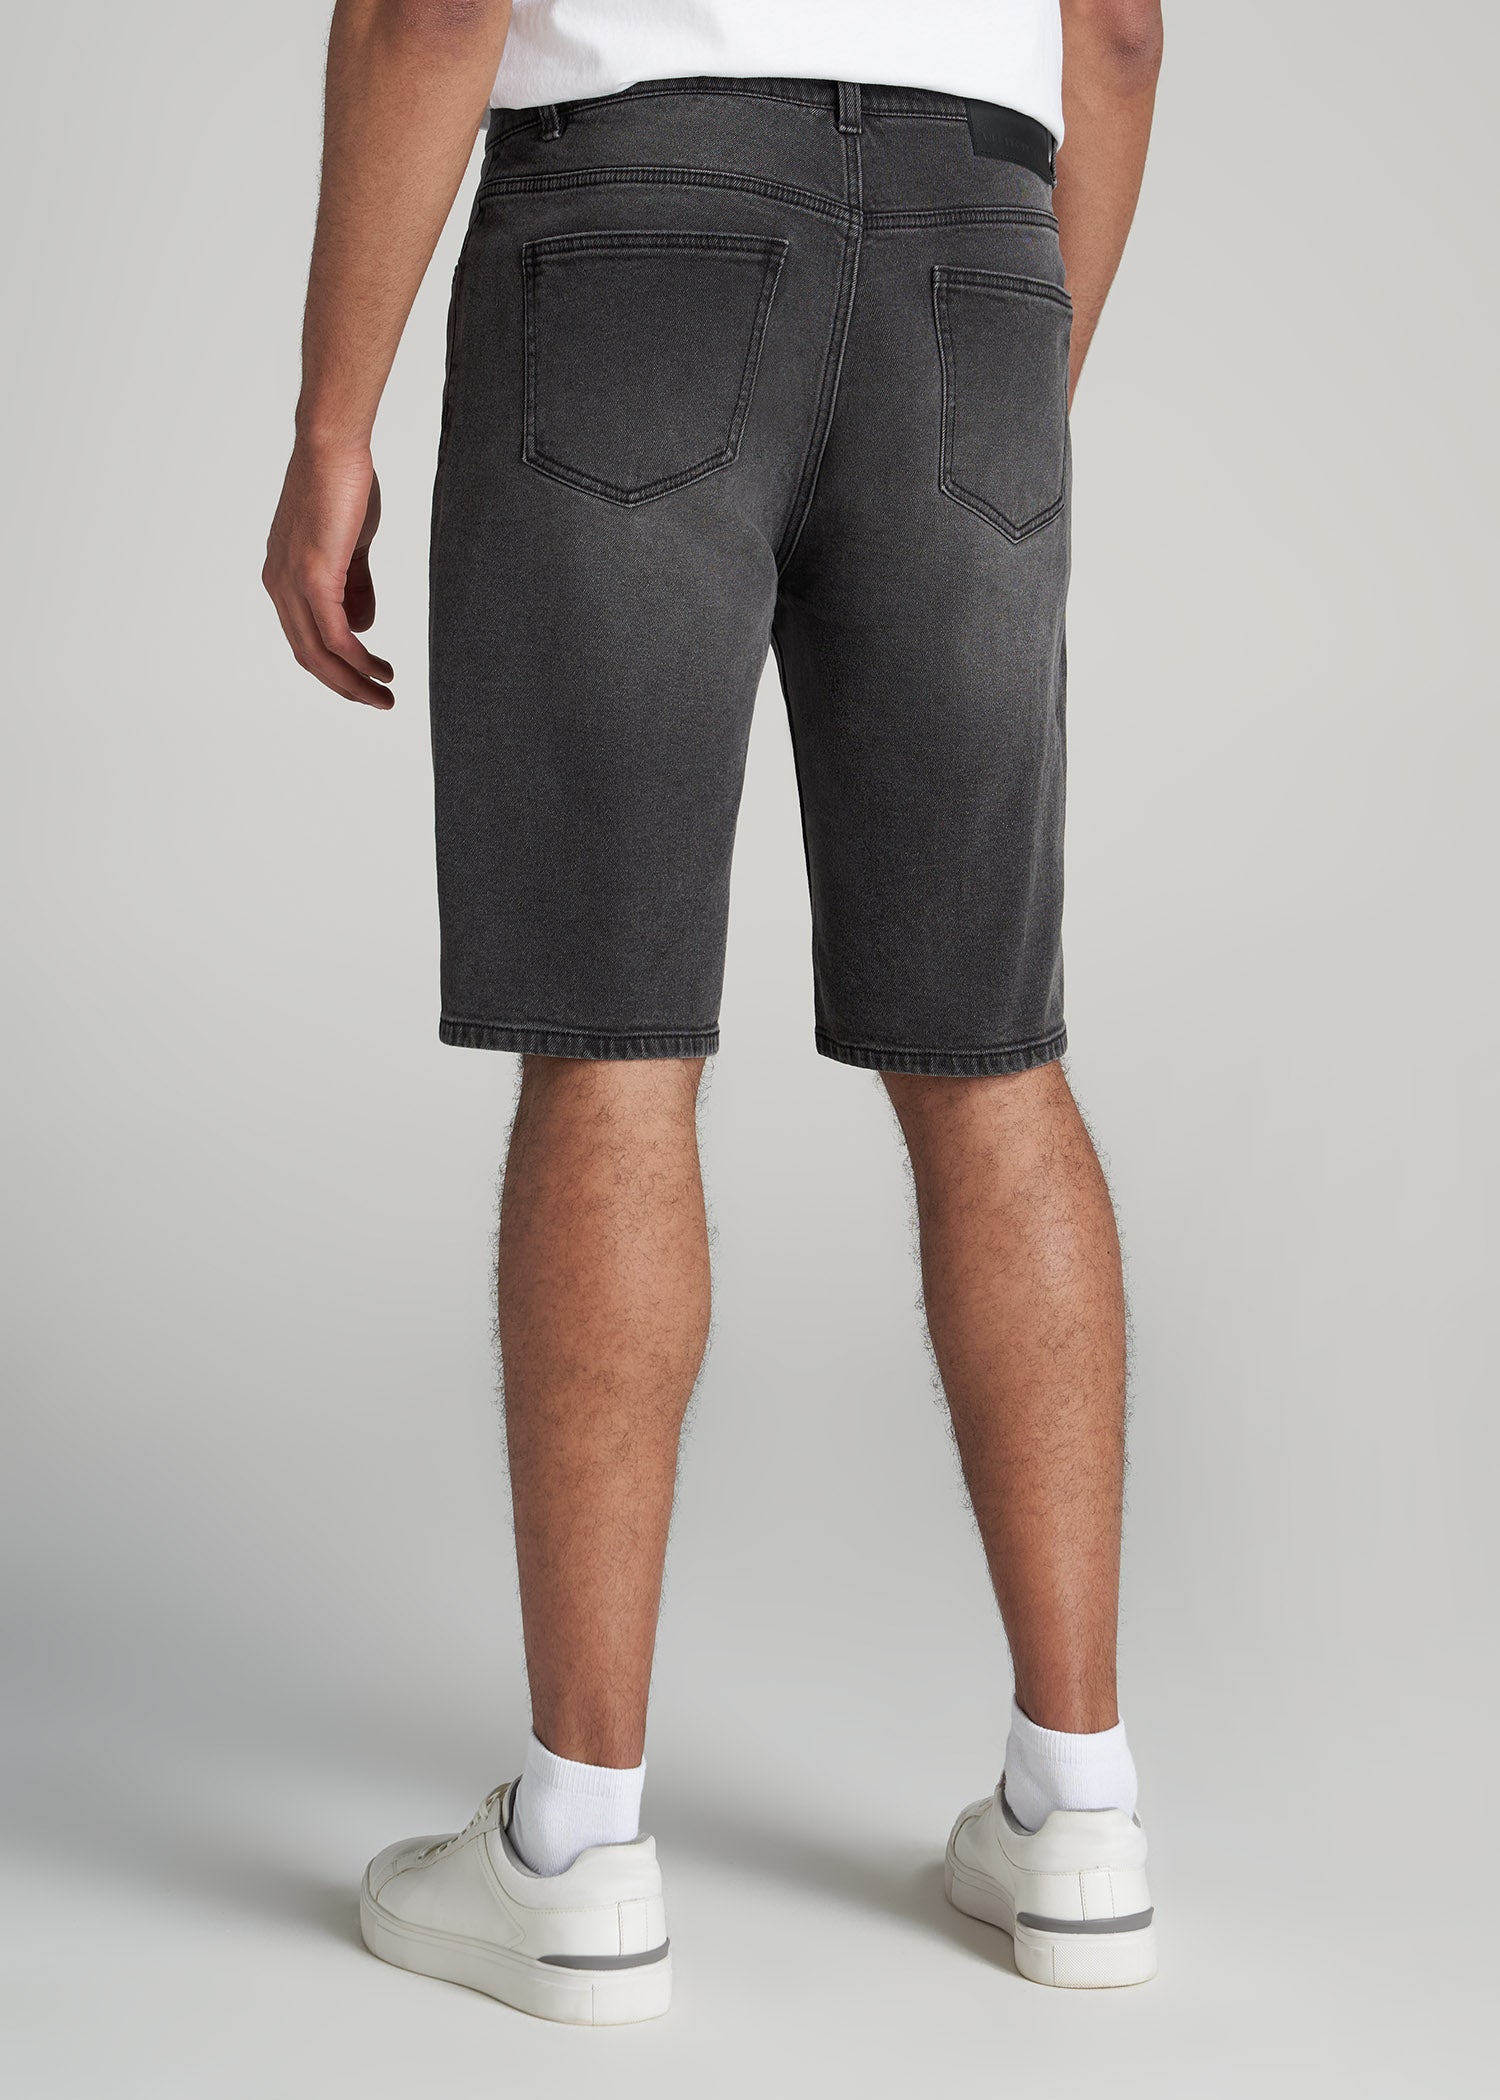 Vintage Black Denim Shorts Mens 38 Denim Jean Shorts Black Wash 90s Zip Fly  | eBay